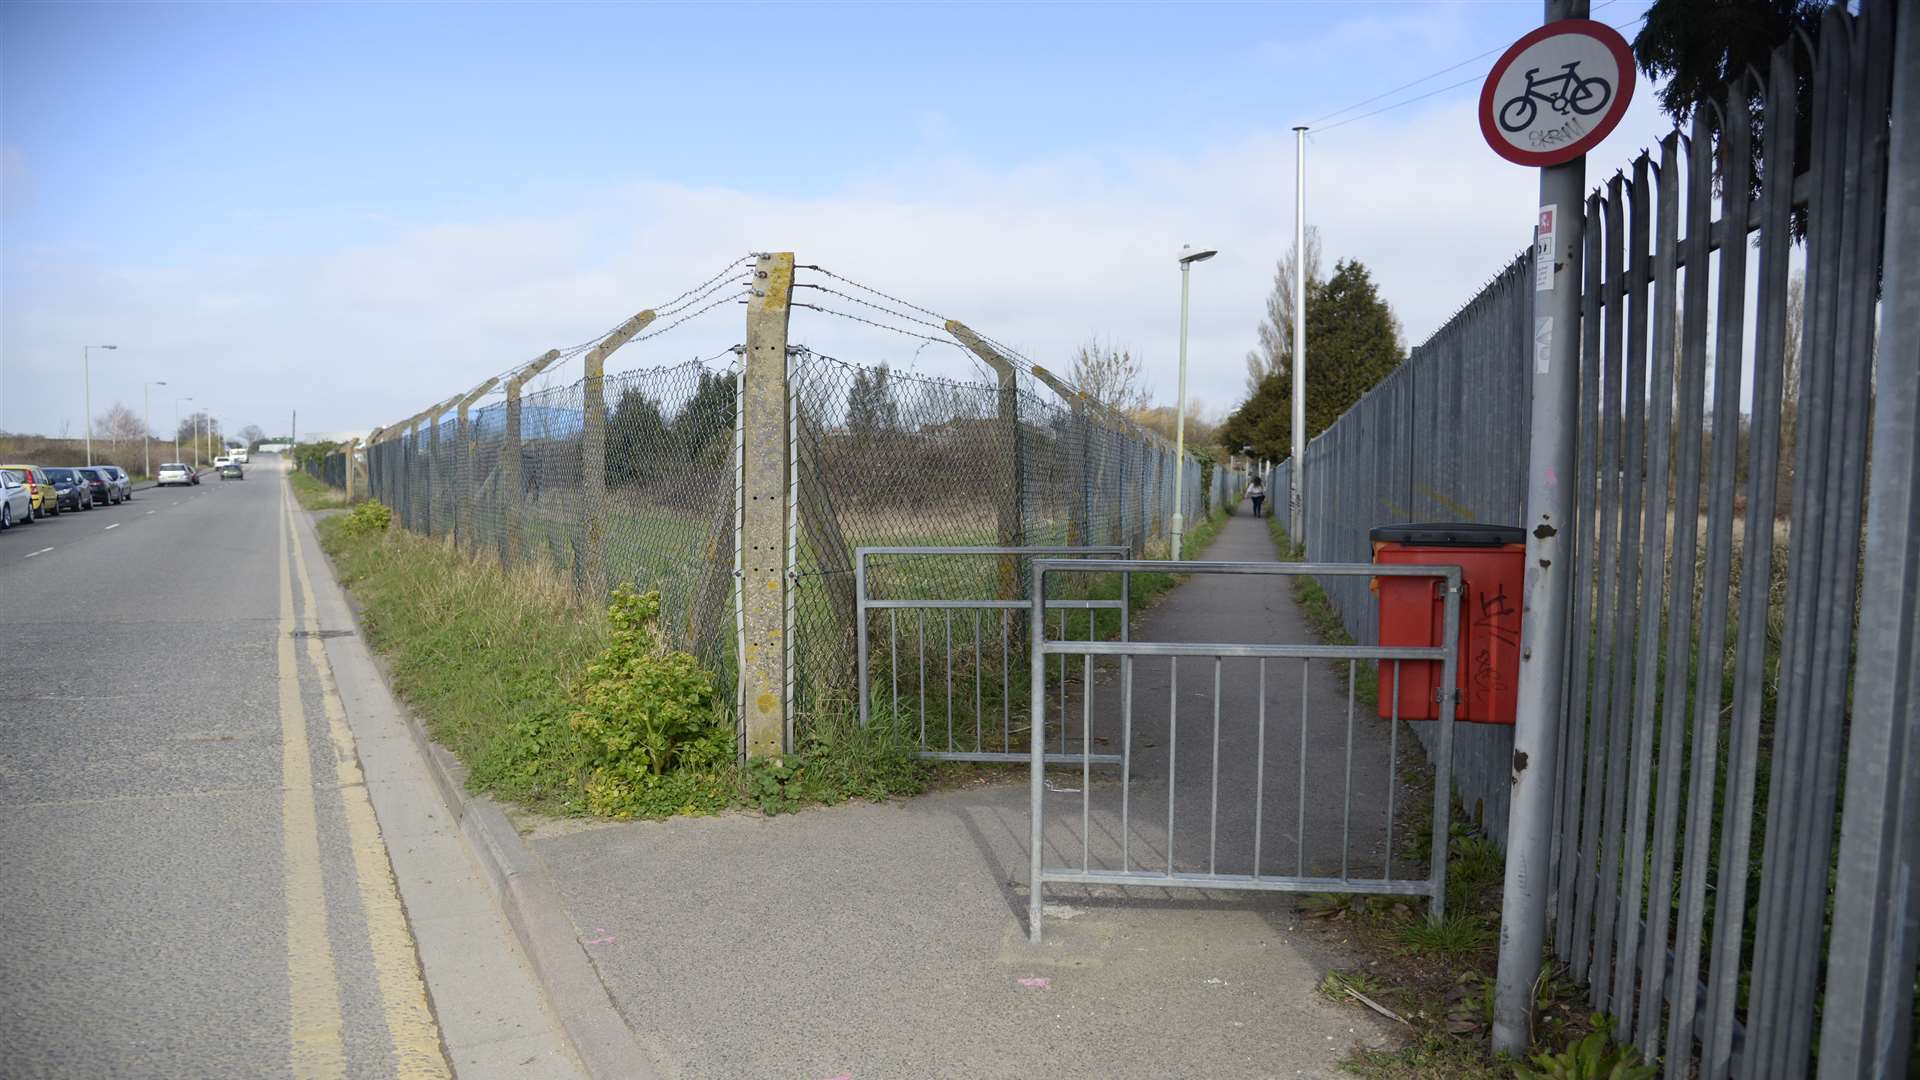 The footpath leading to the railway station from Eddington Lane